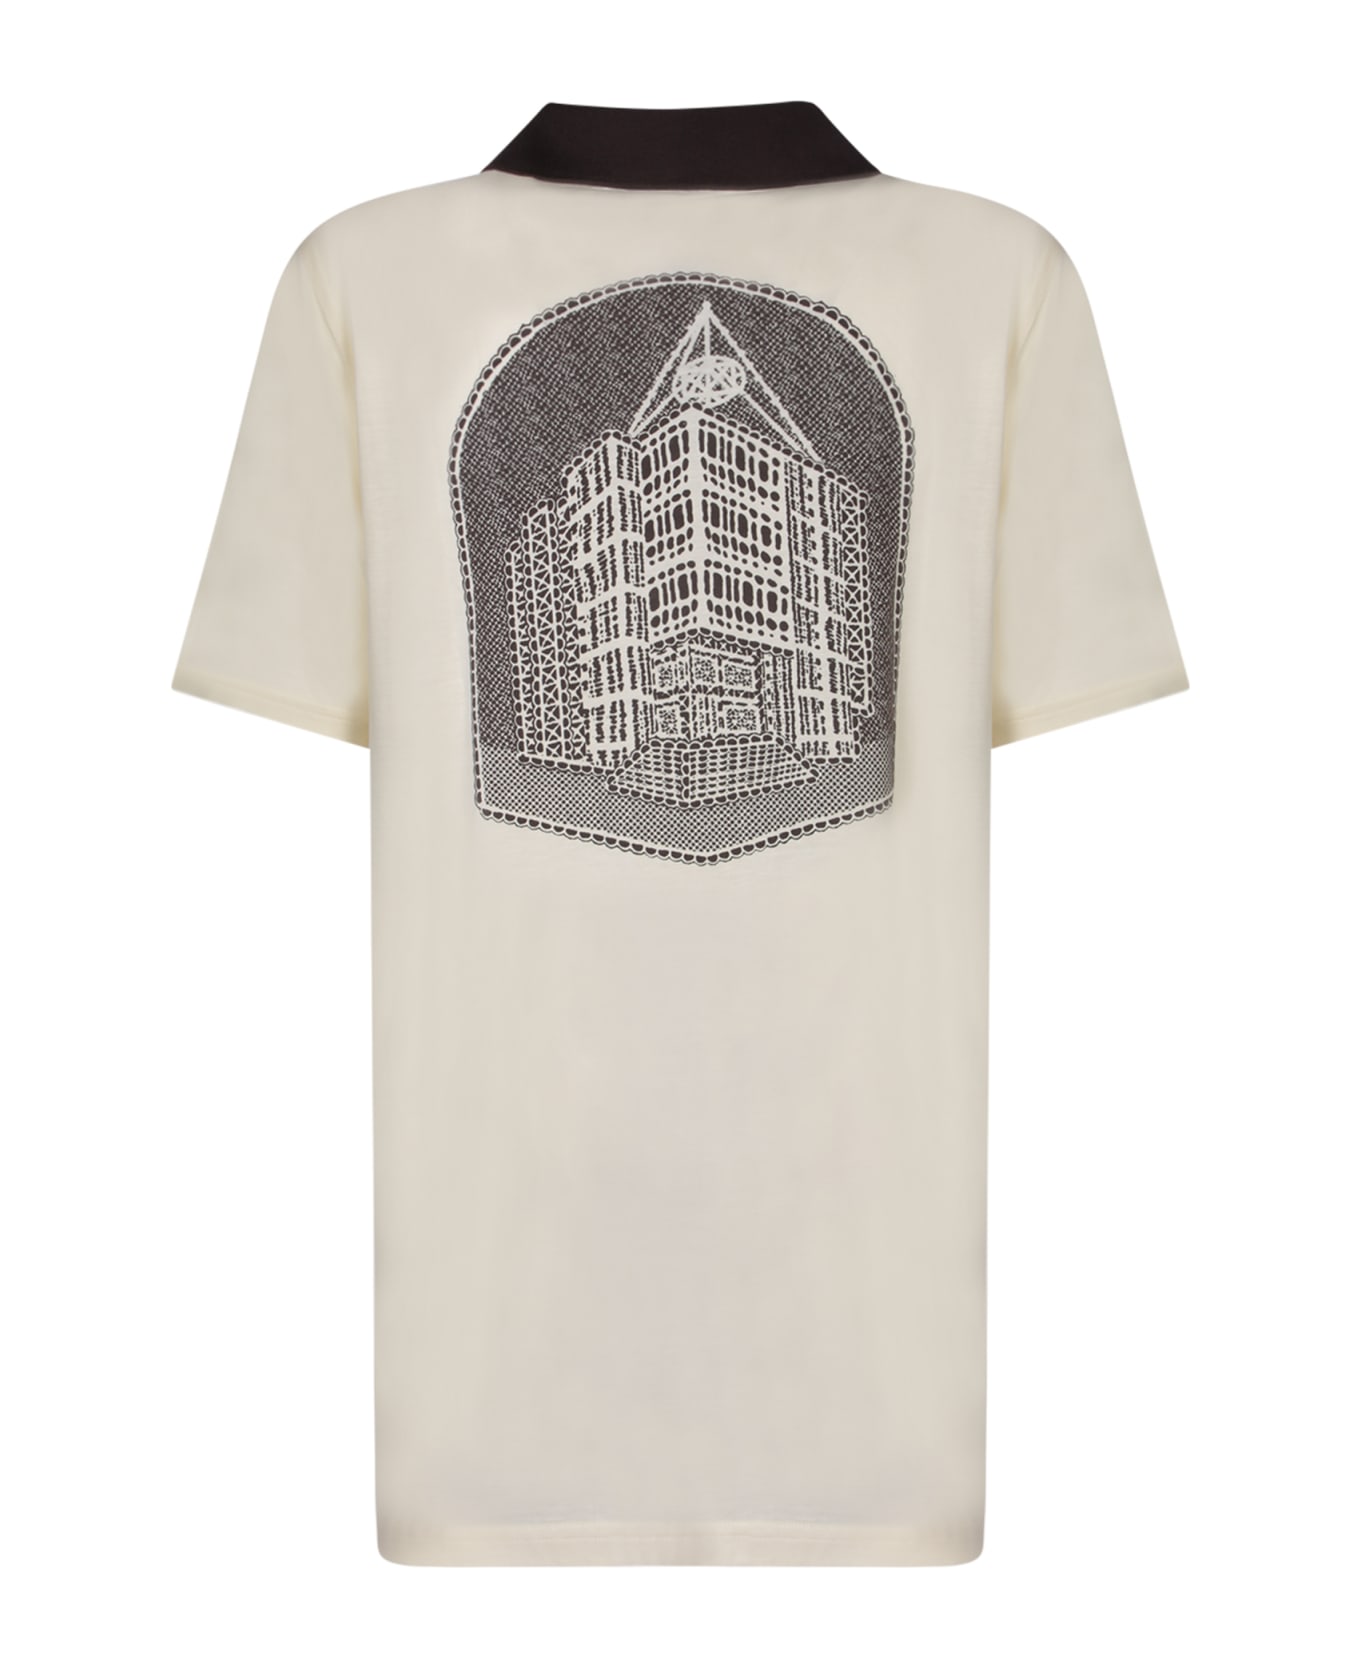 Acne Studios T-shirt - IVORY WHITE